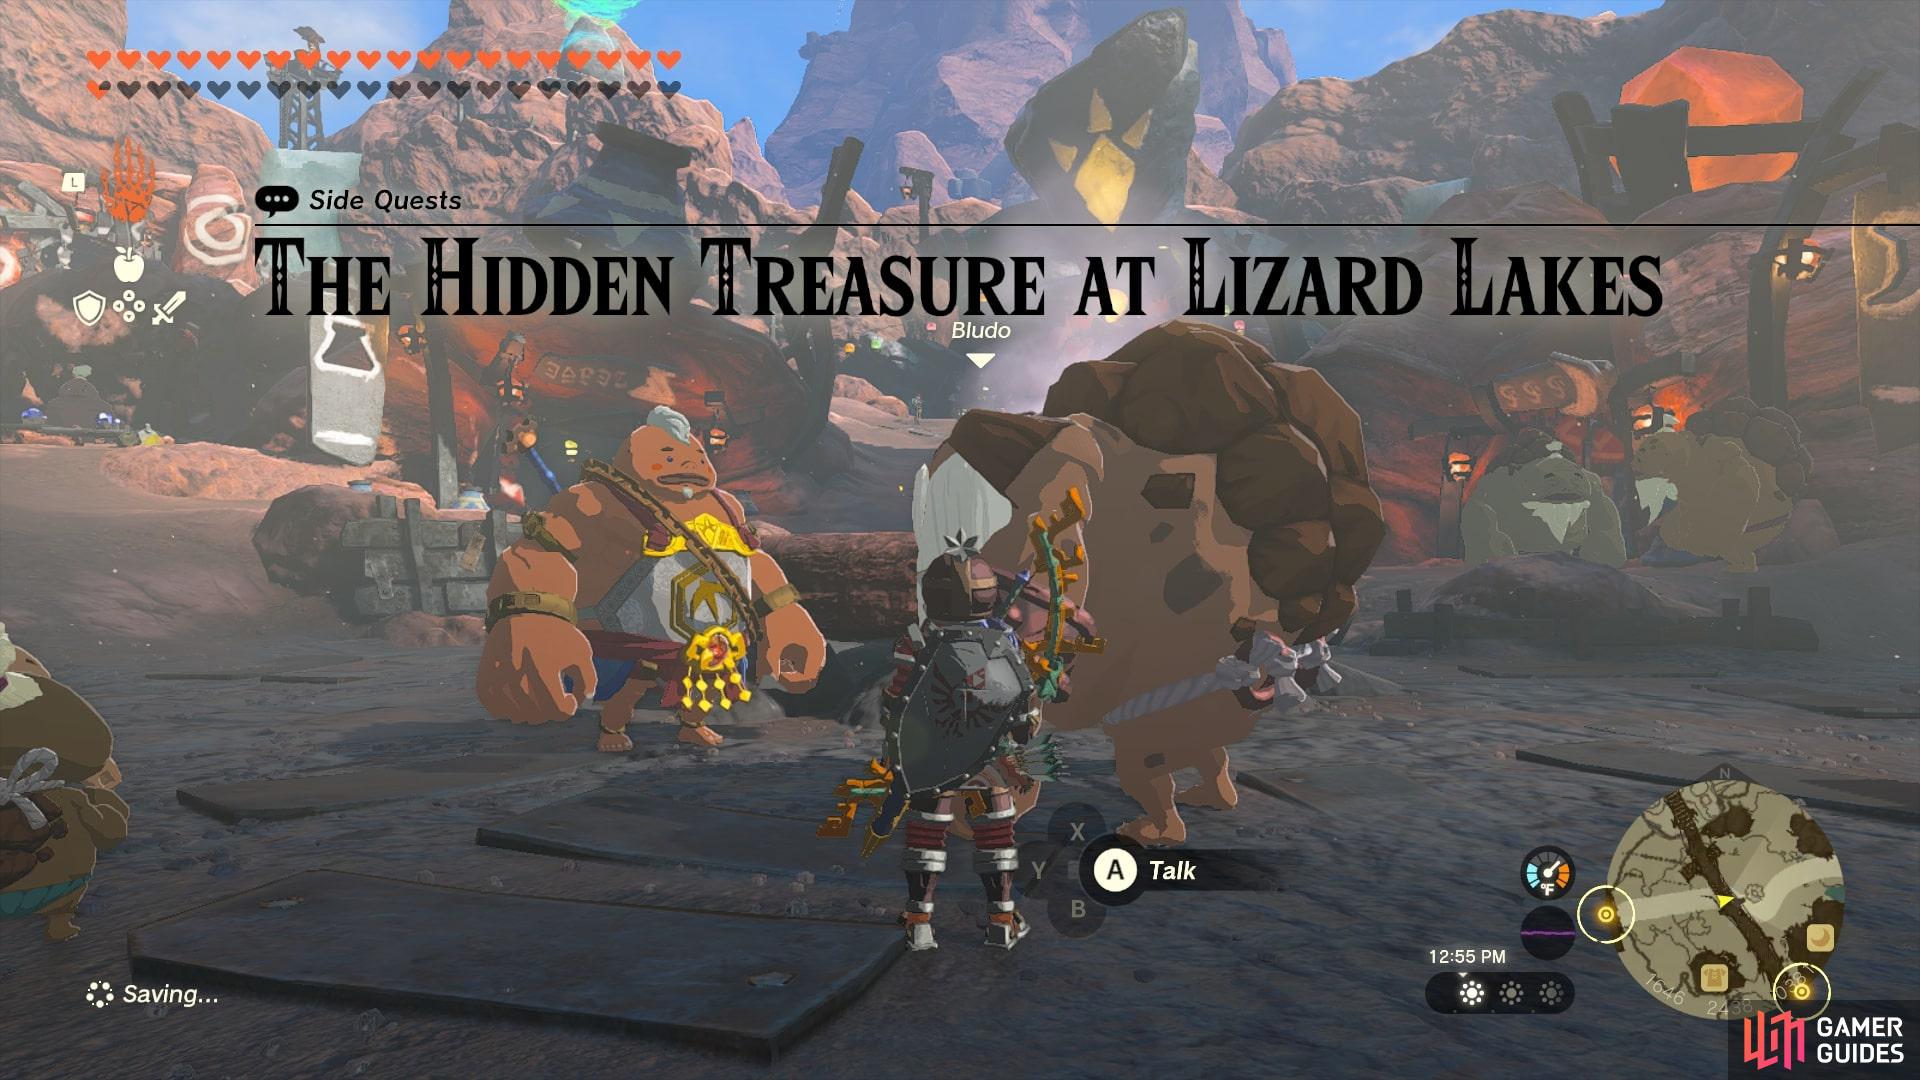 Speak with Yunobo and Bludo to start The Hidden Treasure at Lizard Lakes.